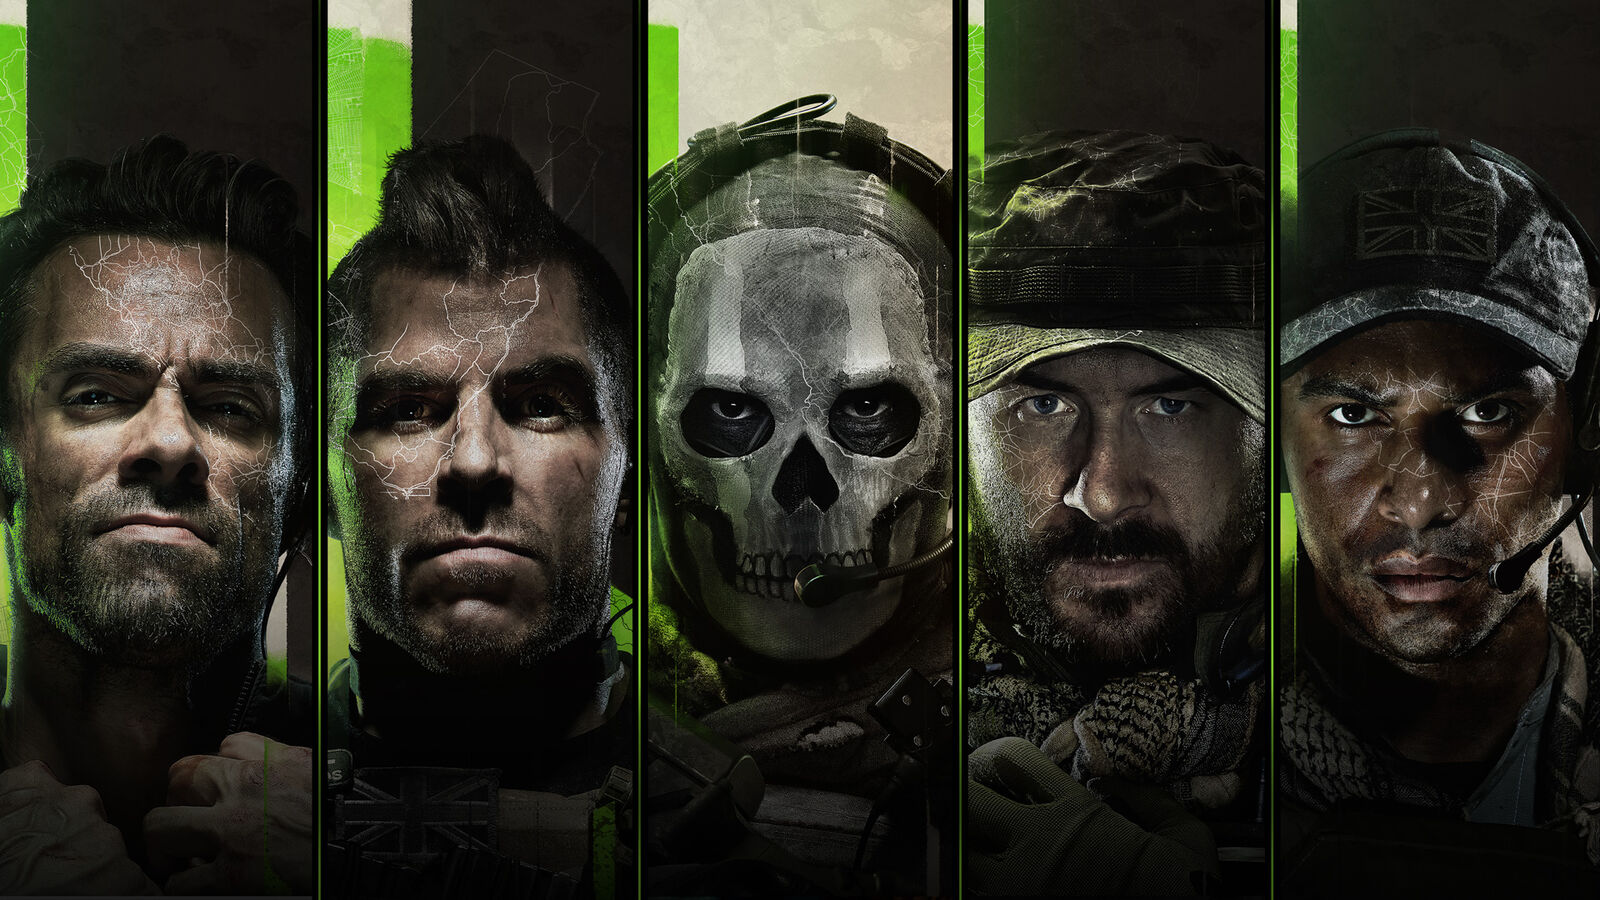 Call of Duty 2019: Modern Warfare 4 or Ghosts 2?